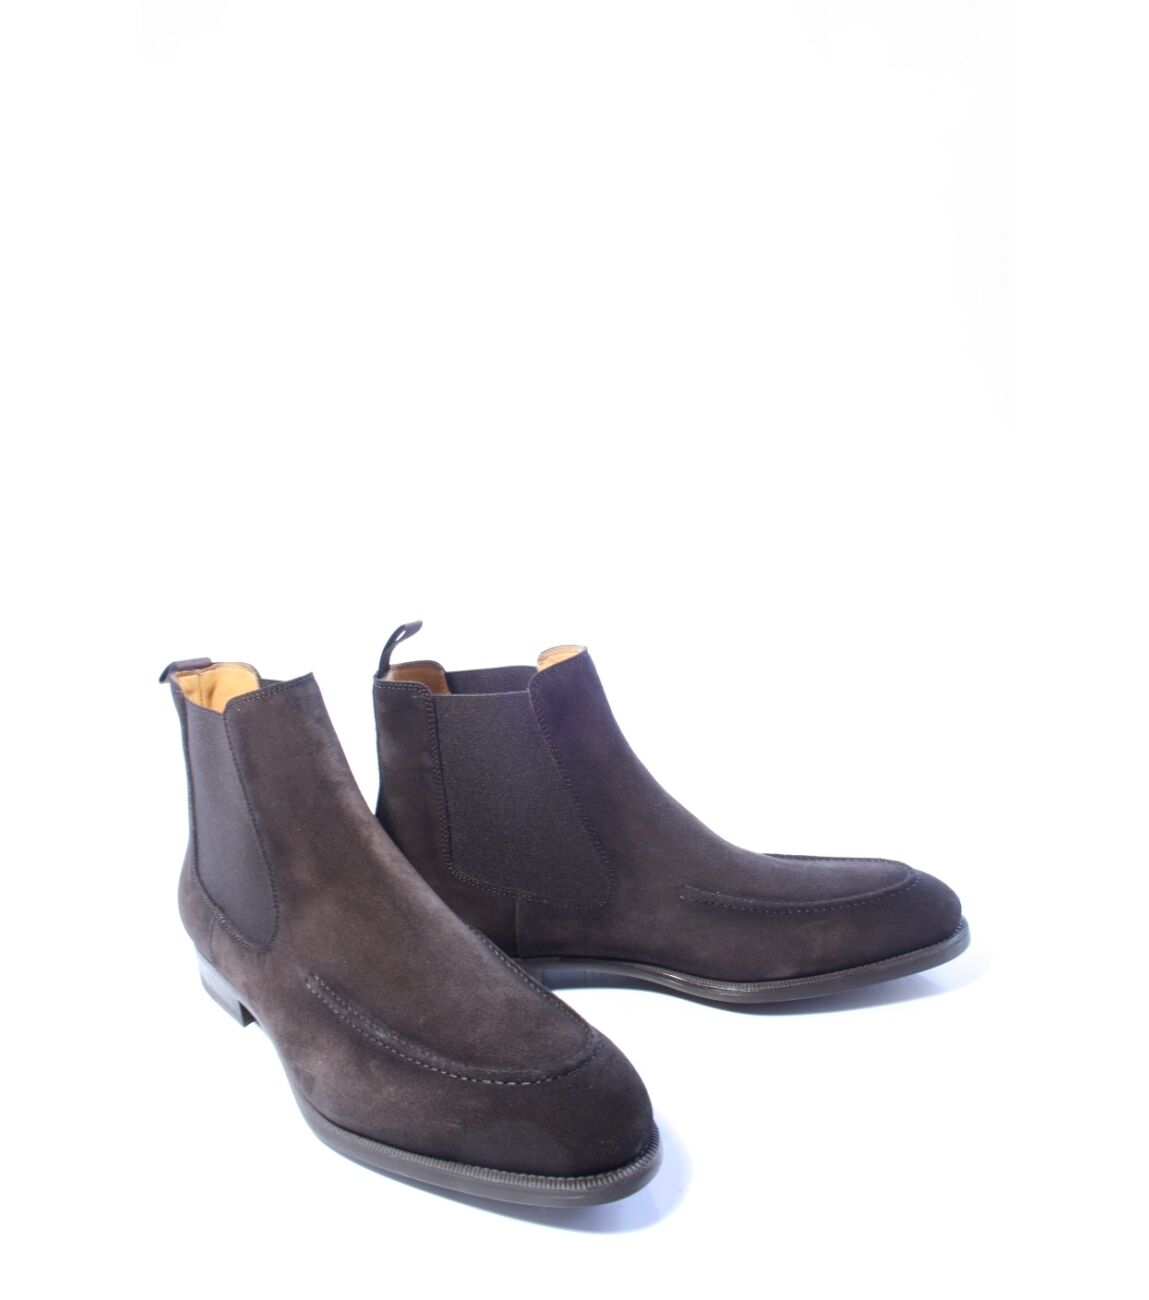 Magnanni Heren boots gekleed bruin 41